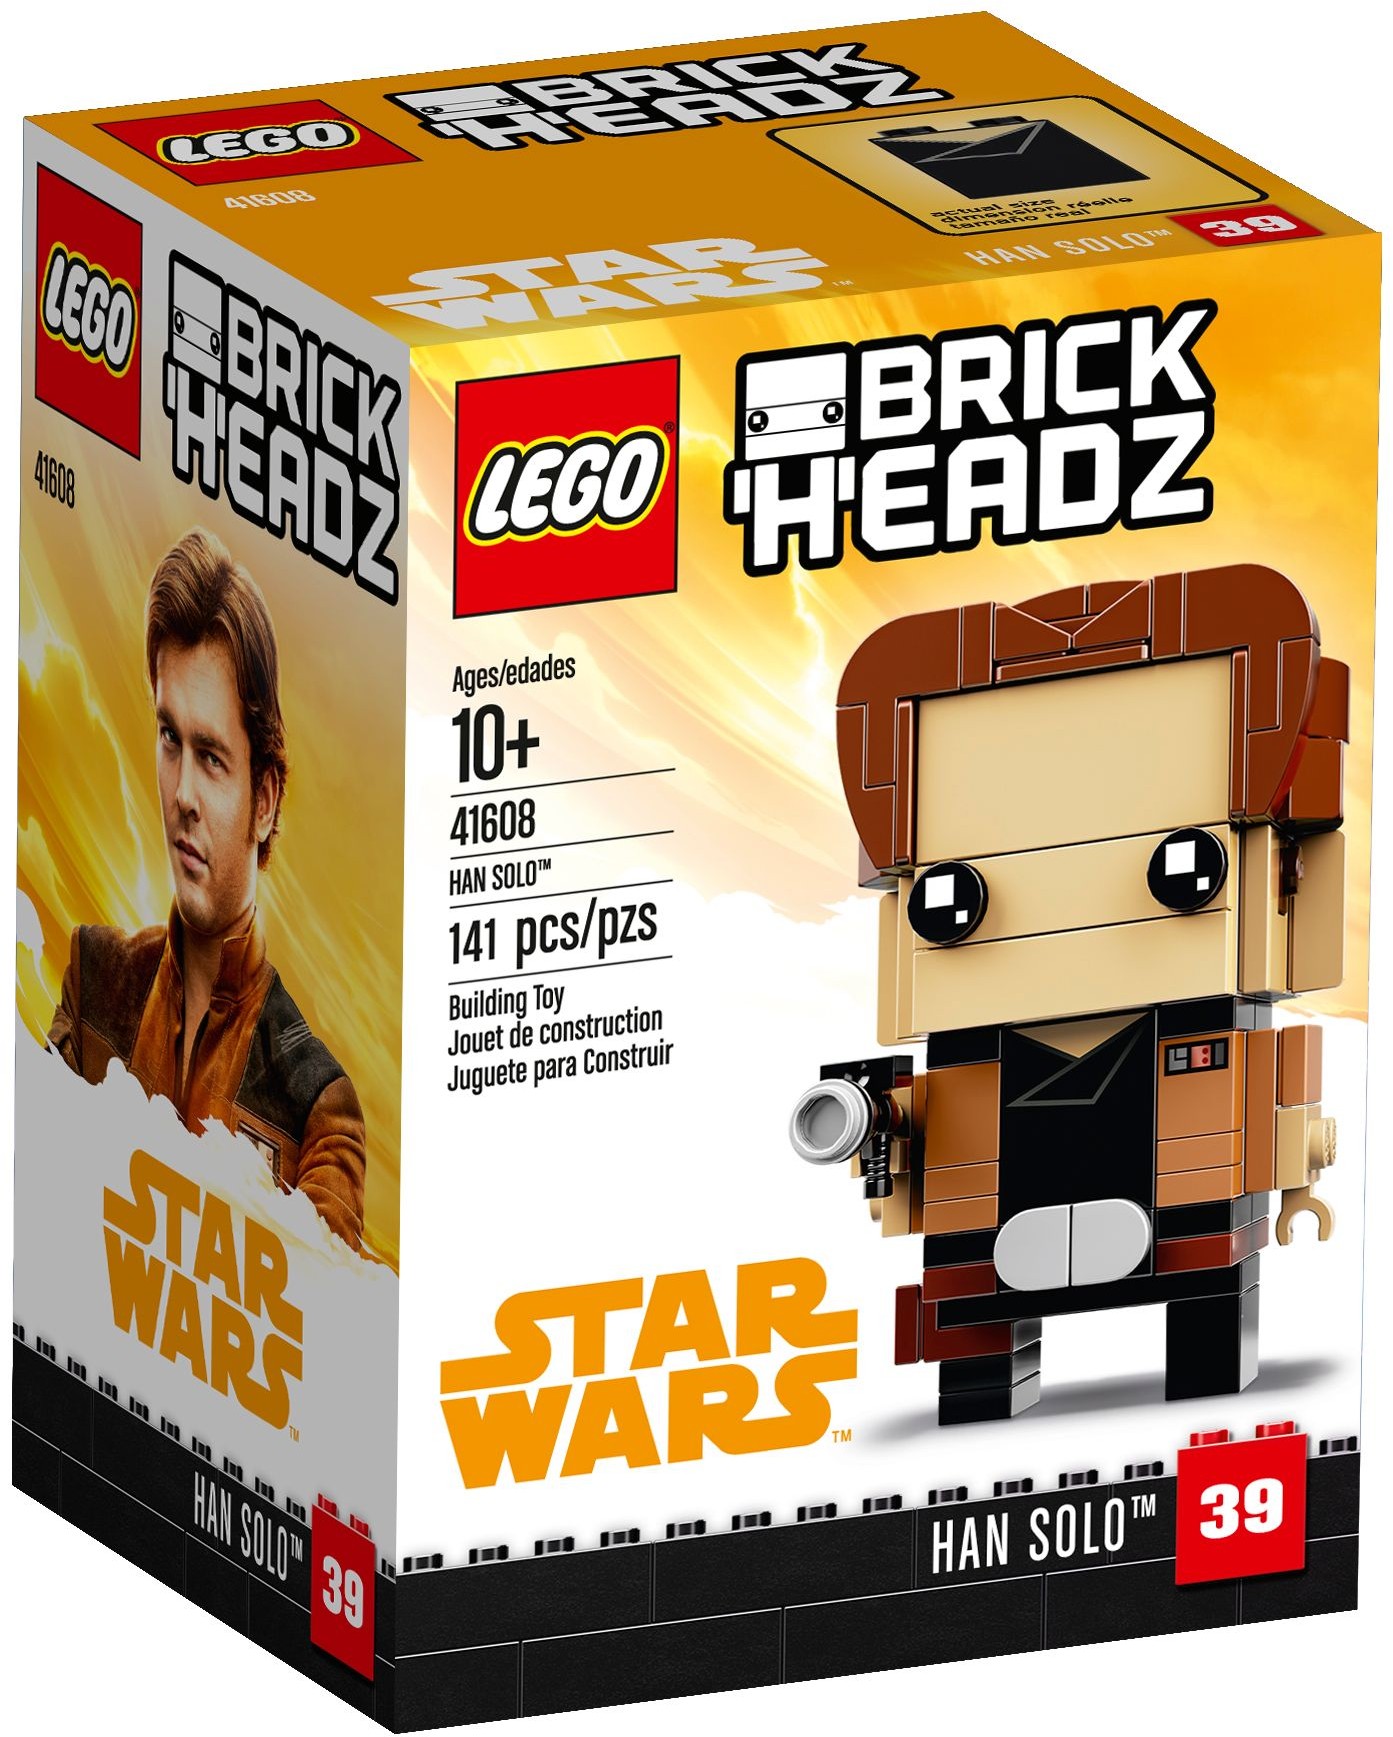 41608 Han Solo Brick Headz